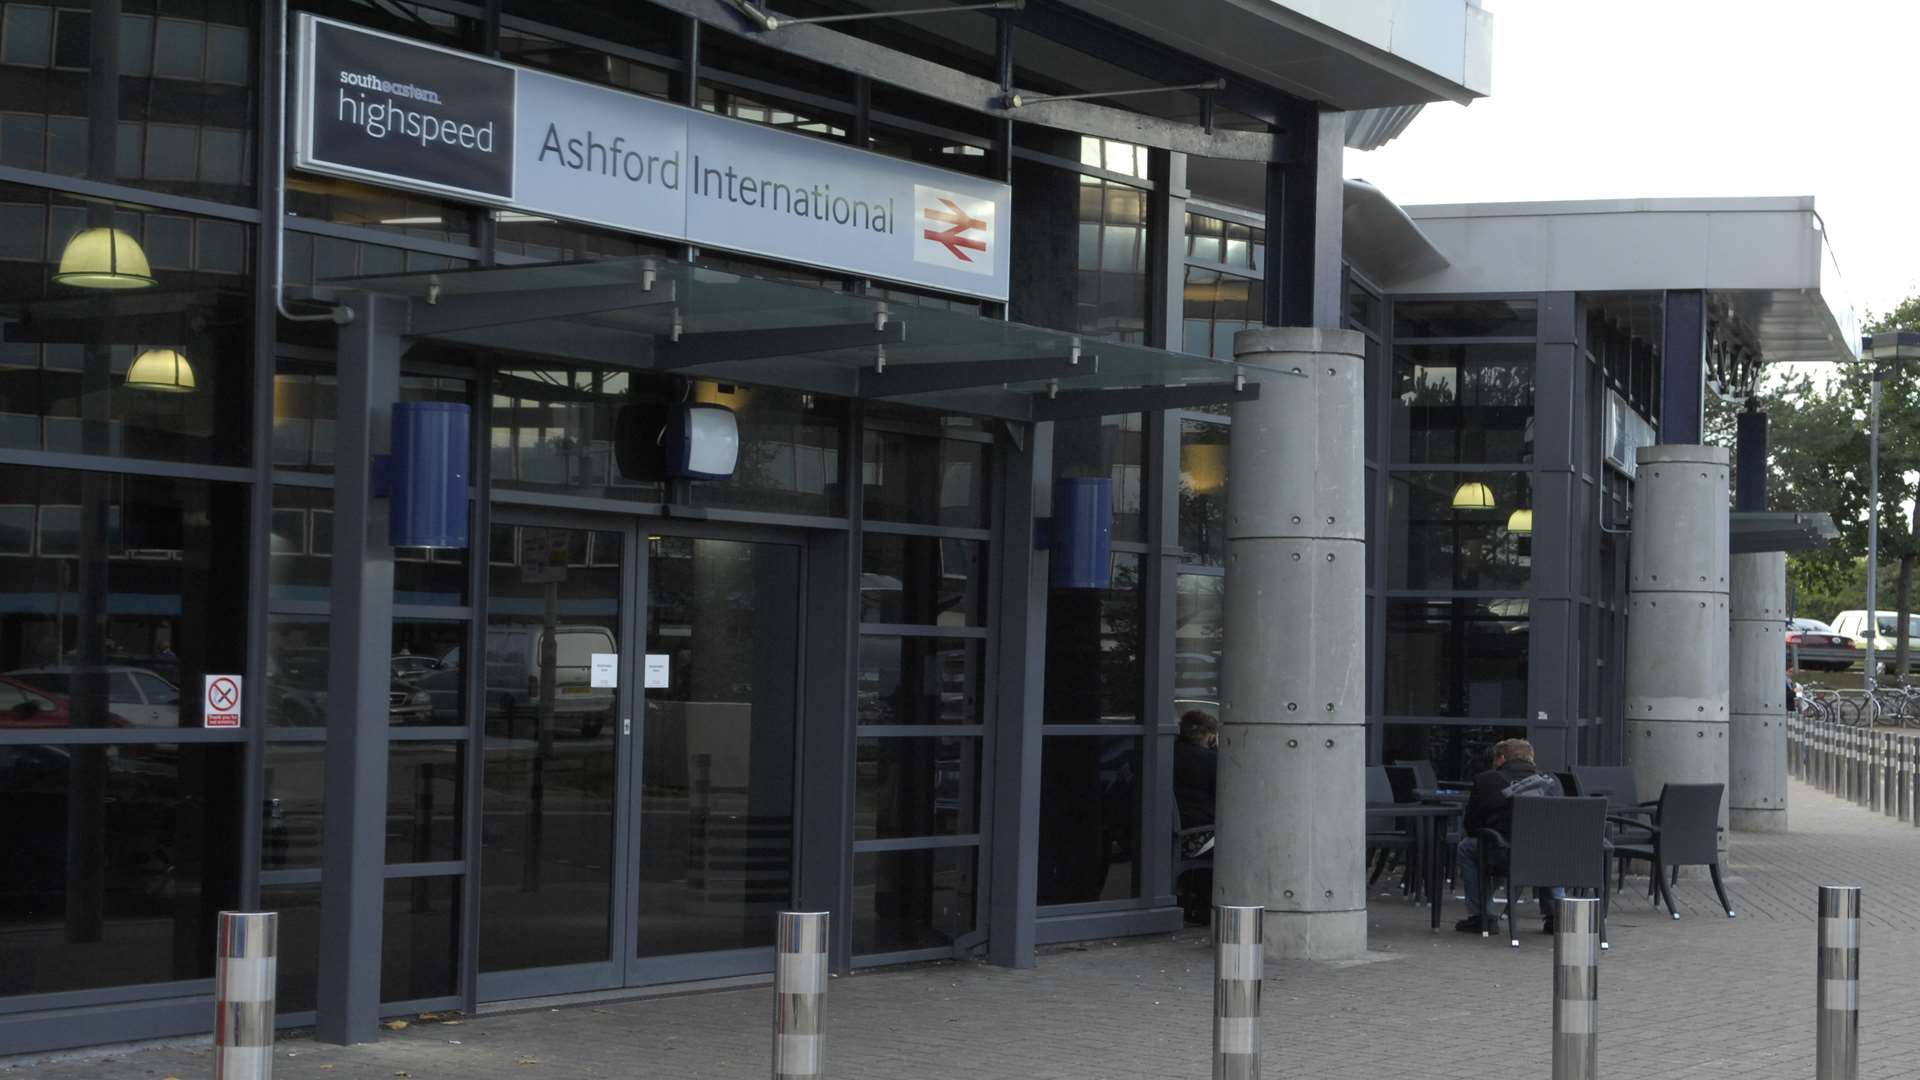 Ashford International Station. Picture: Martin Apps